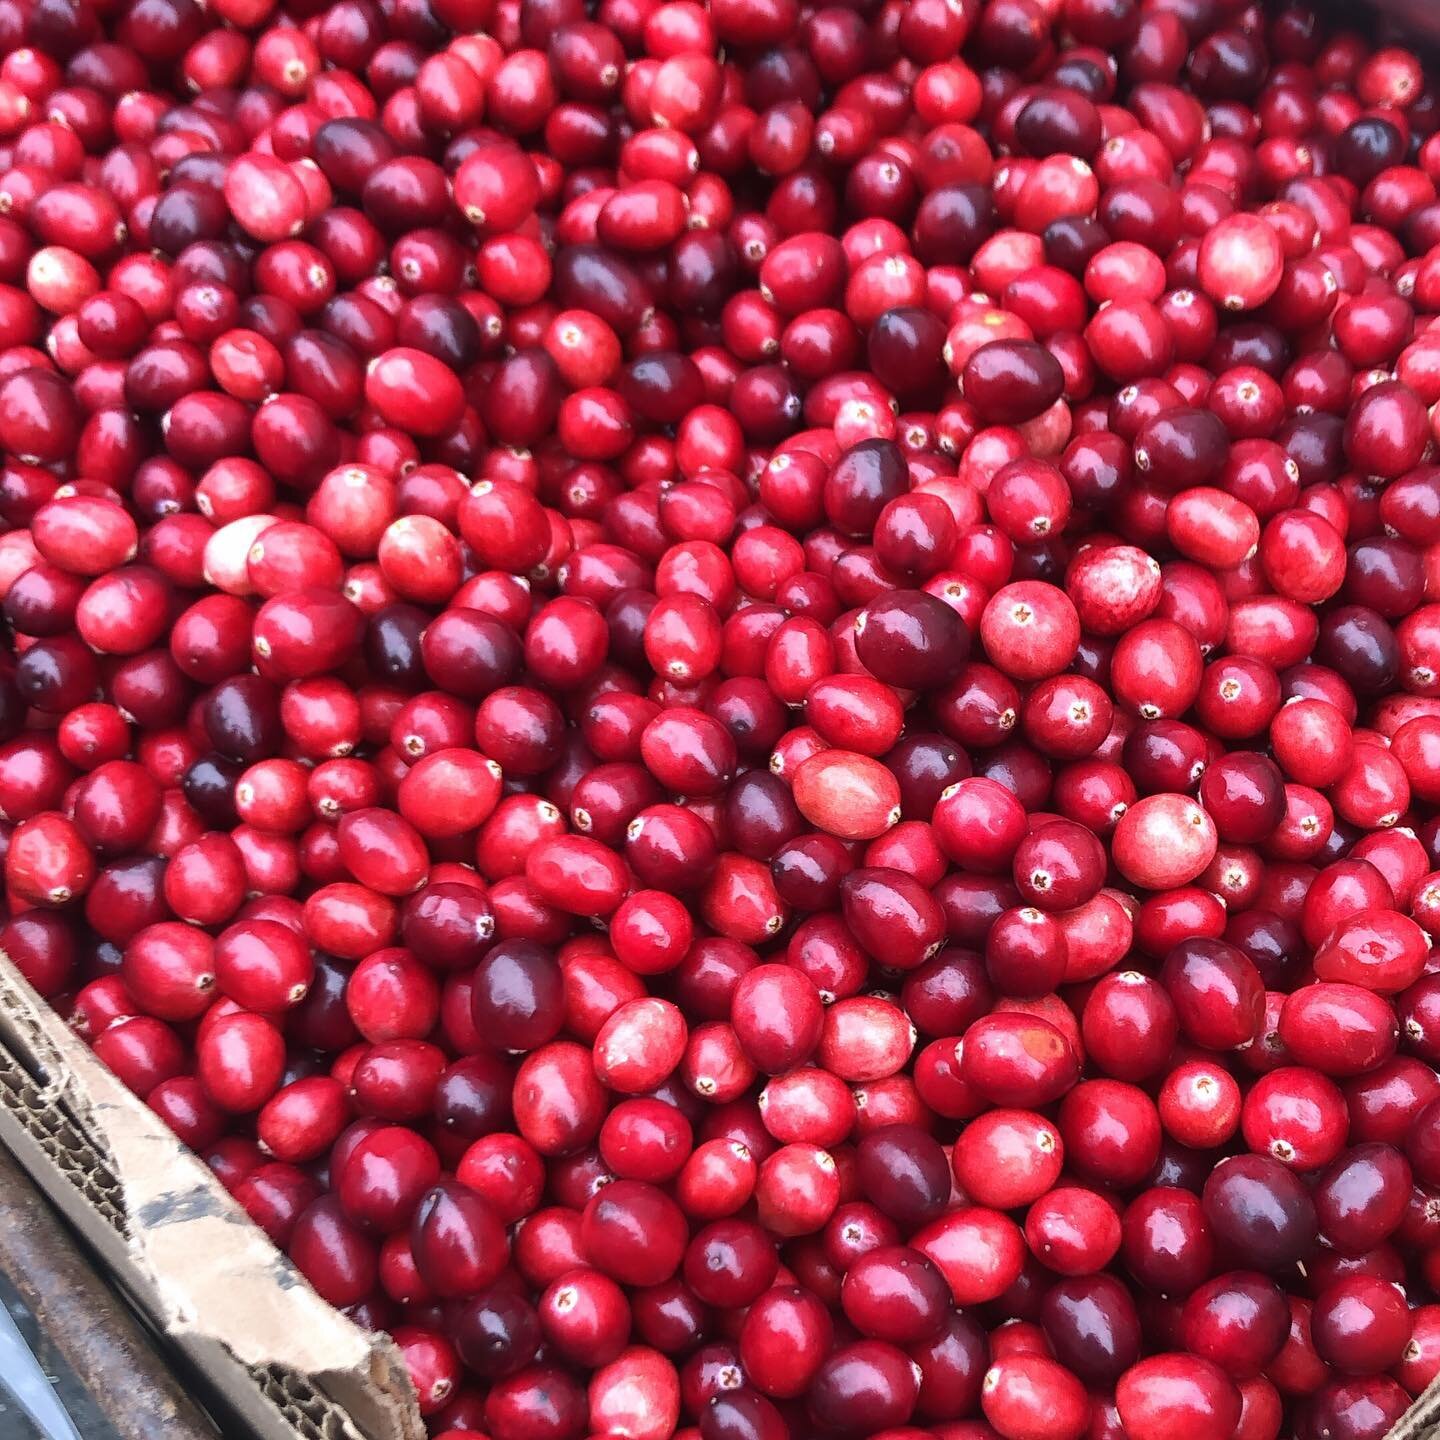 Tis the season #cranberry #cranberrysauce #cranberrybog #nature